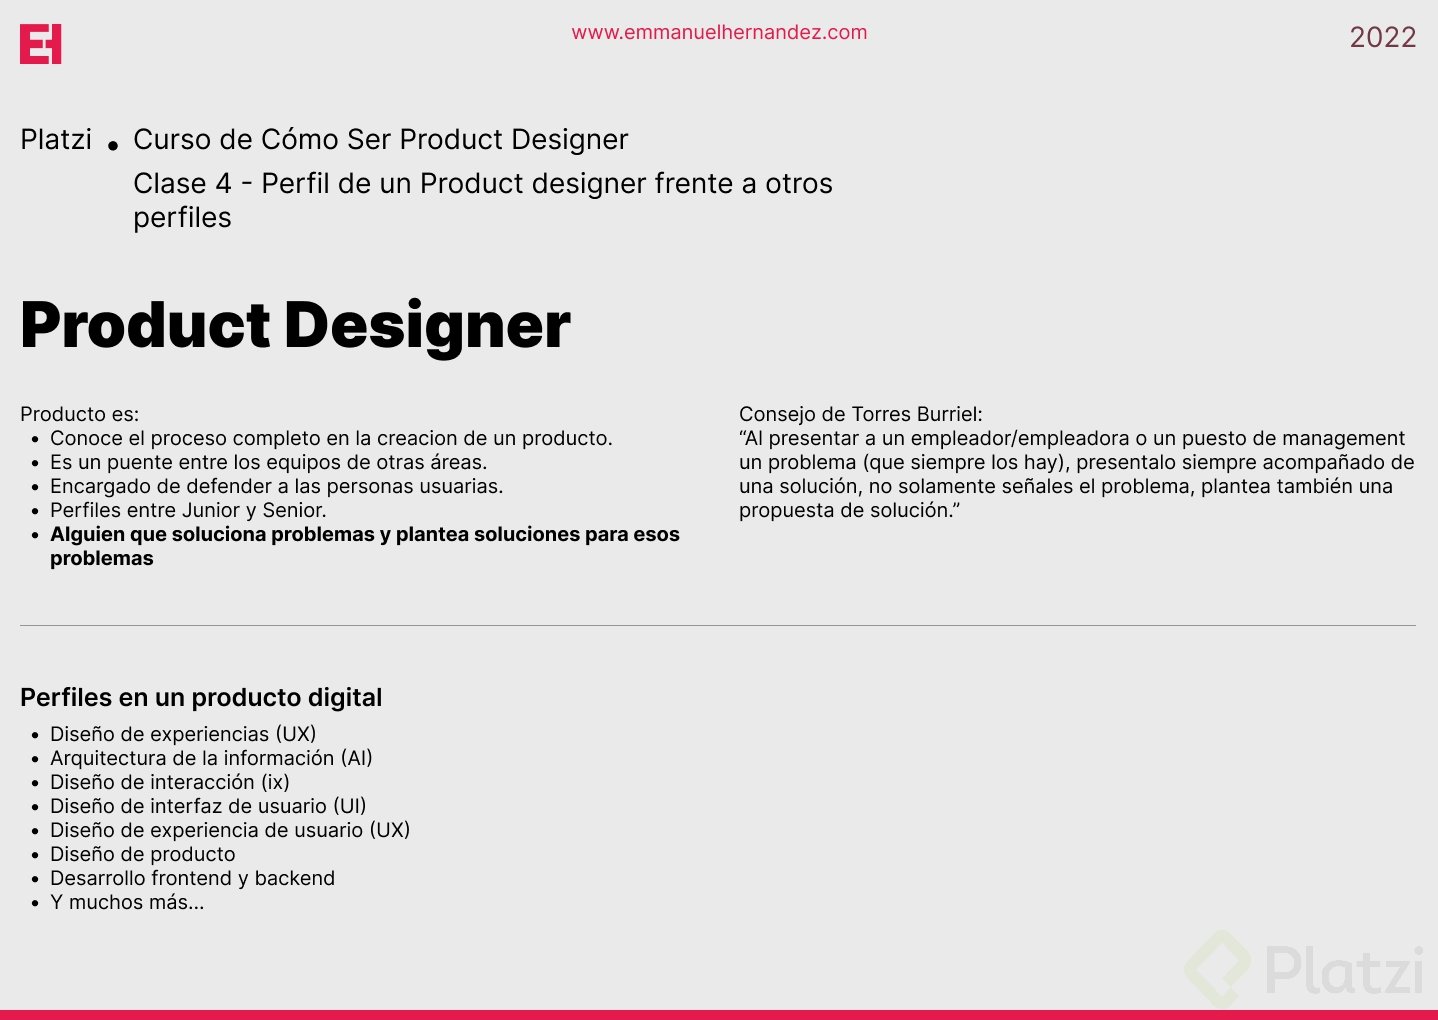 emmanuelhernandez_curso de como ser product designer - Clase 4.jpg